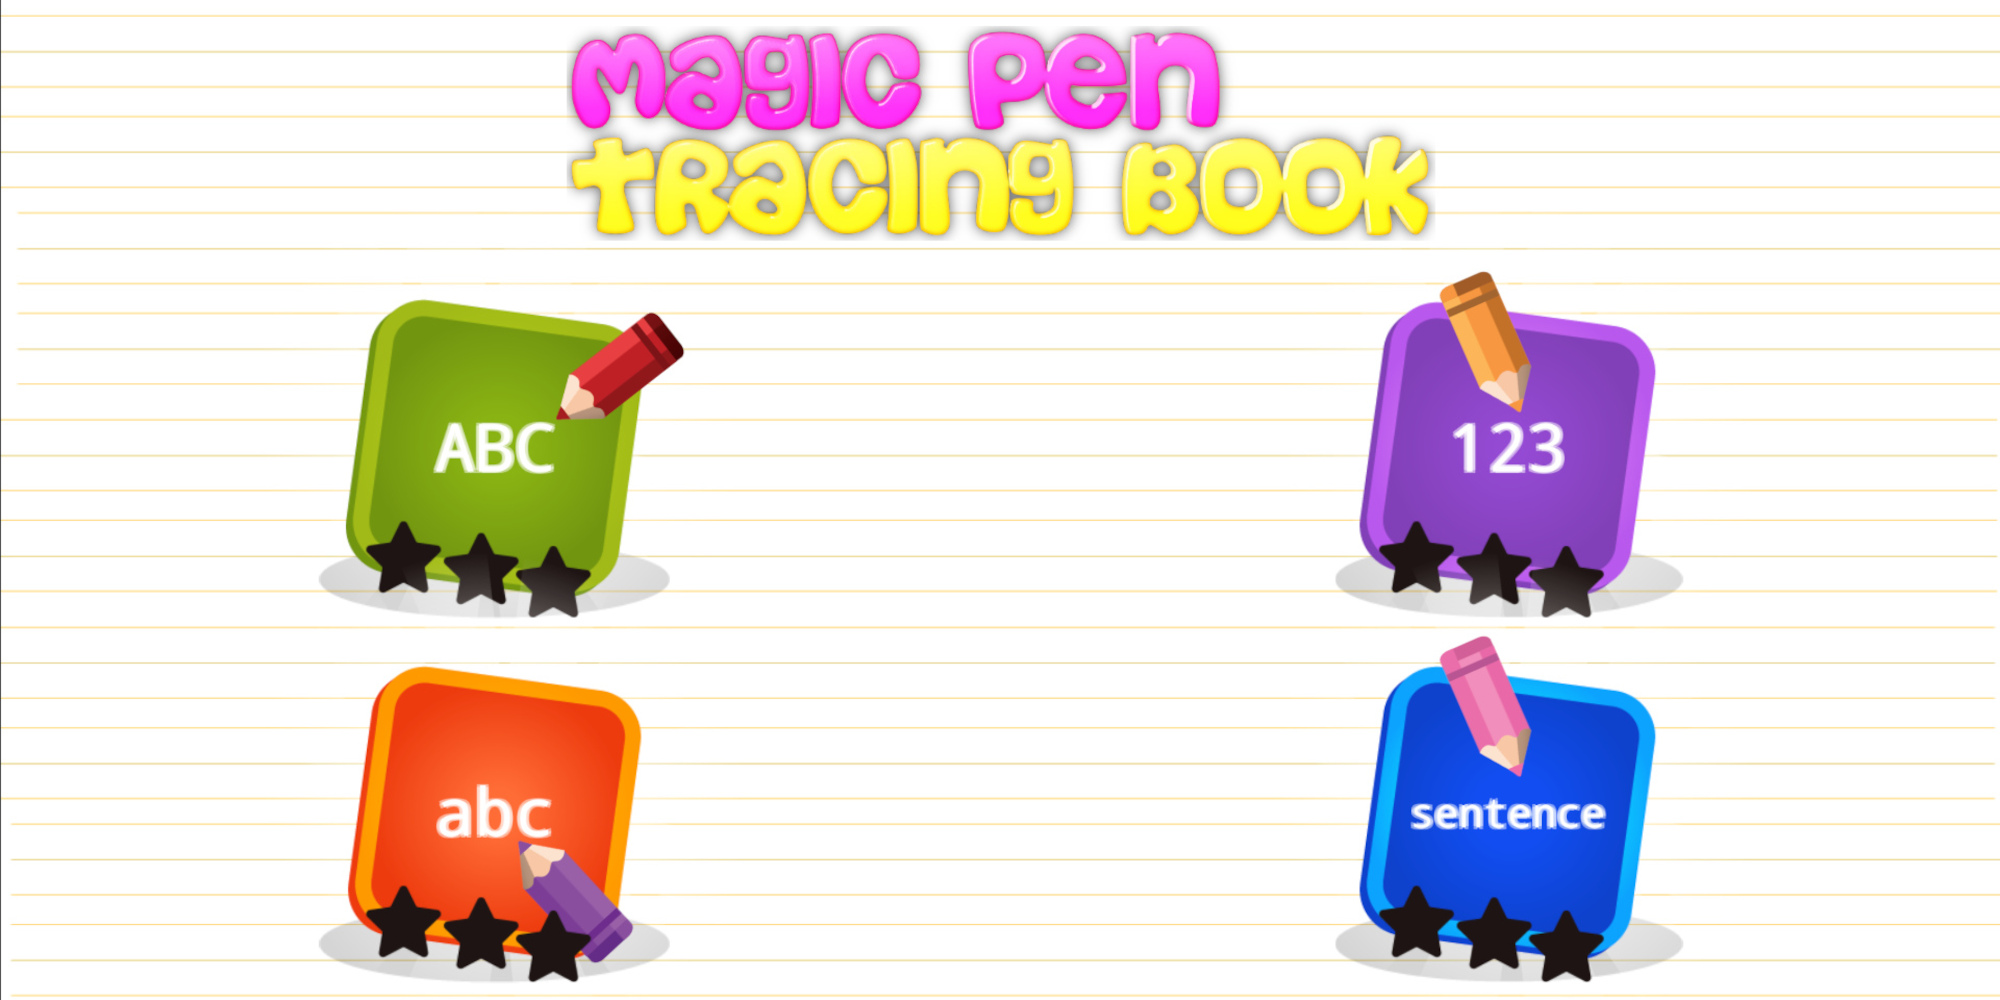 Magic Pen Tracing Book, Nintendo Switch download software